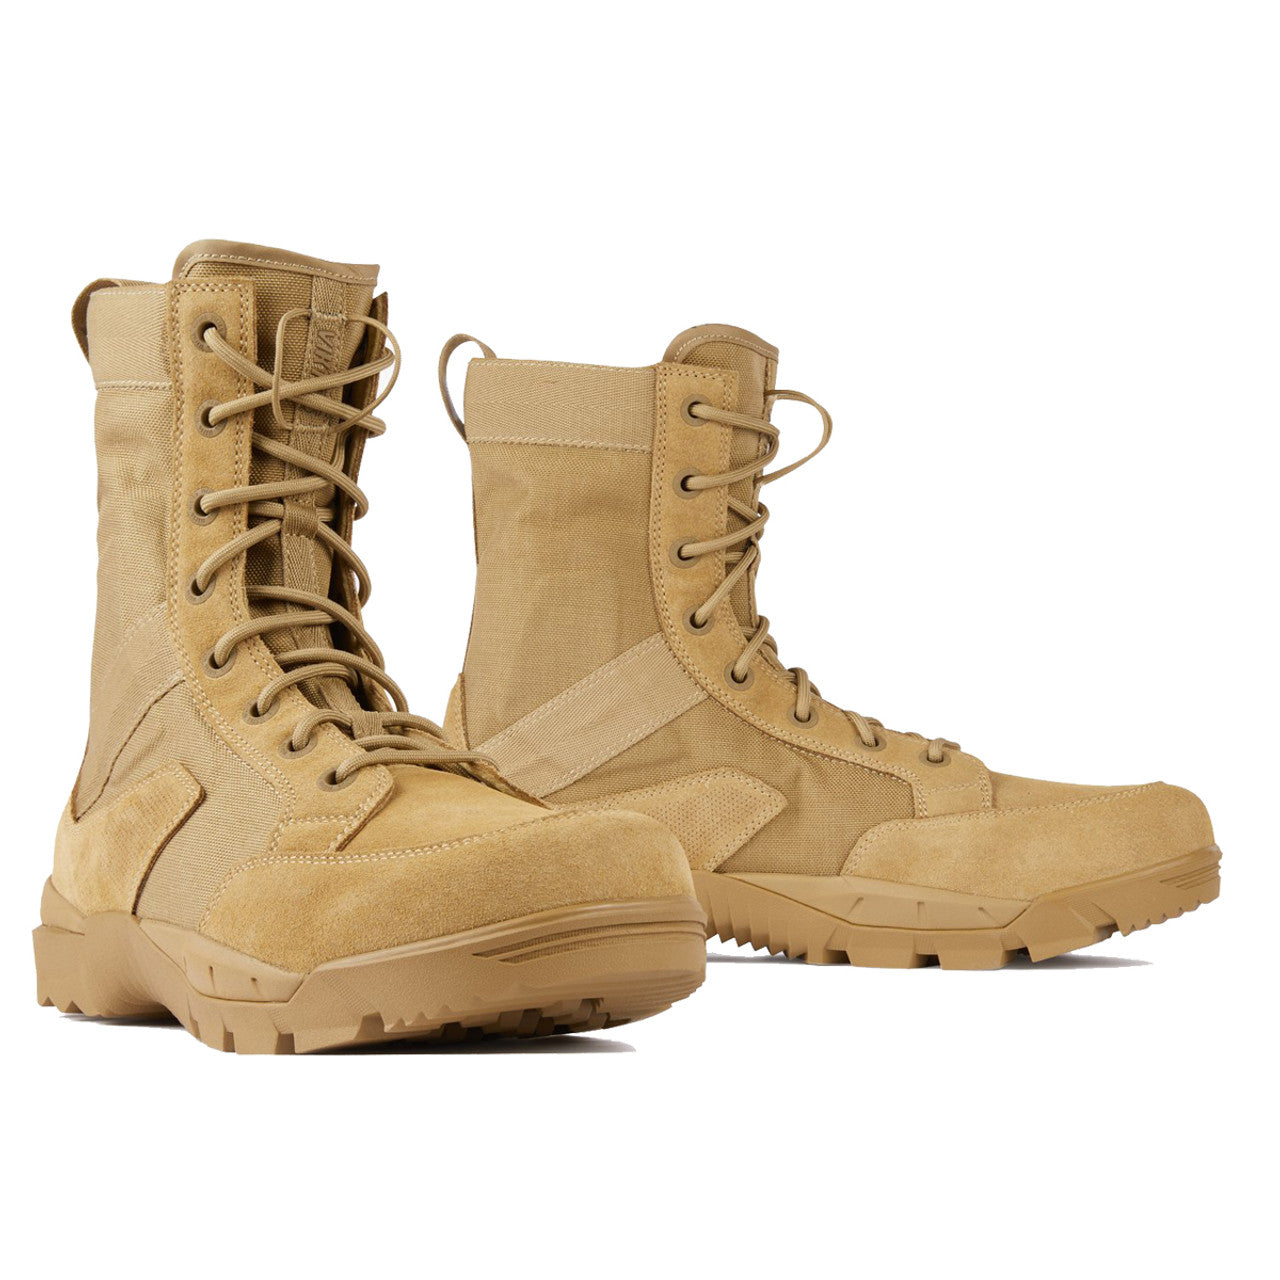 Viktos Johnny Combat SF Boots Coyote Tactical Gear Australia Supplier Distributor Dealer